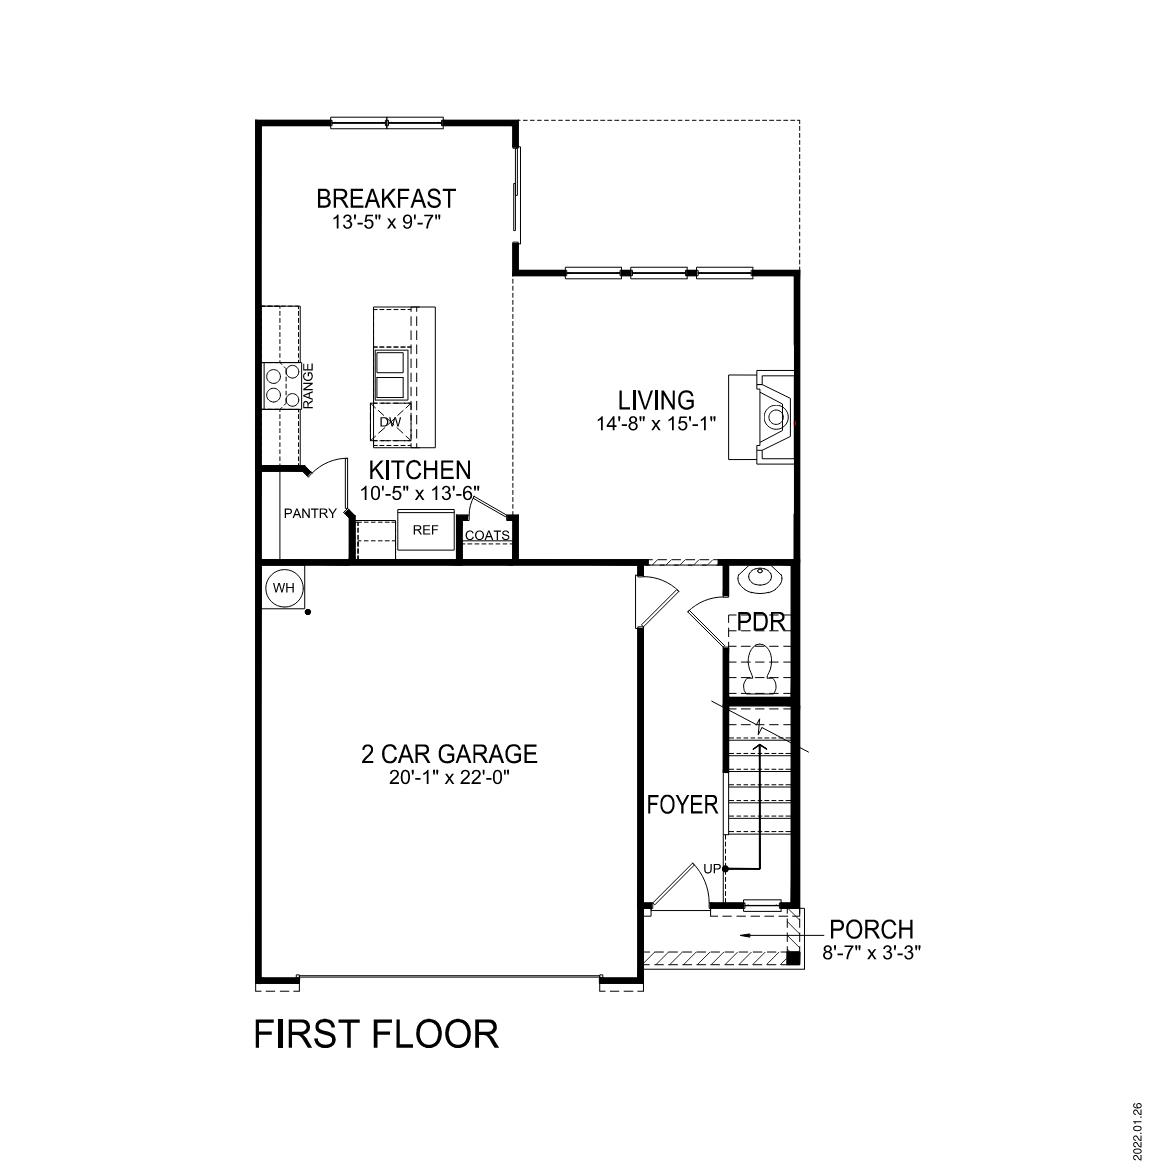 Darwin first floor plan